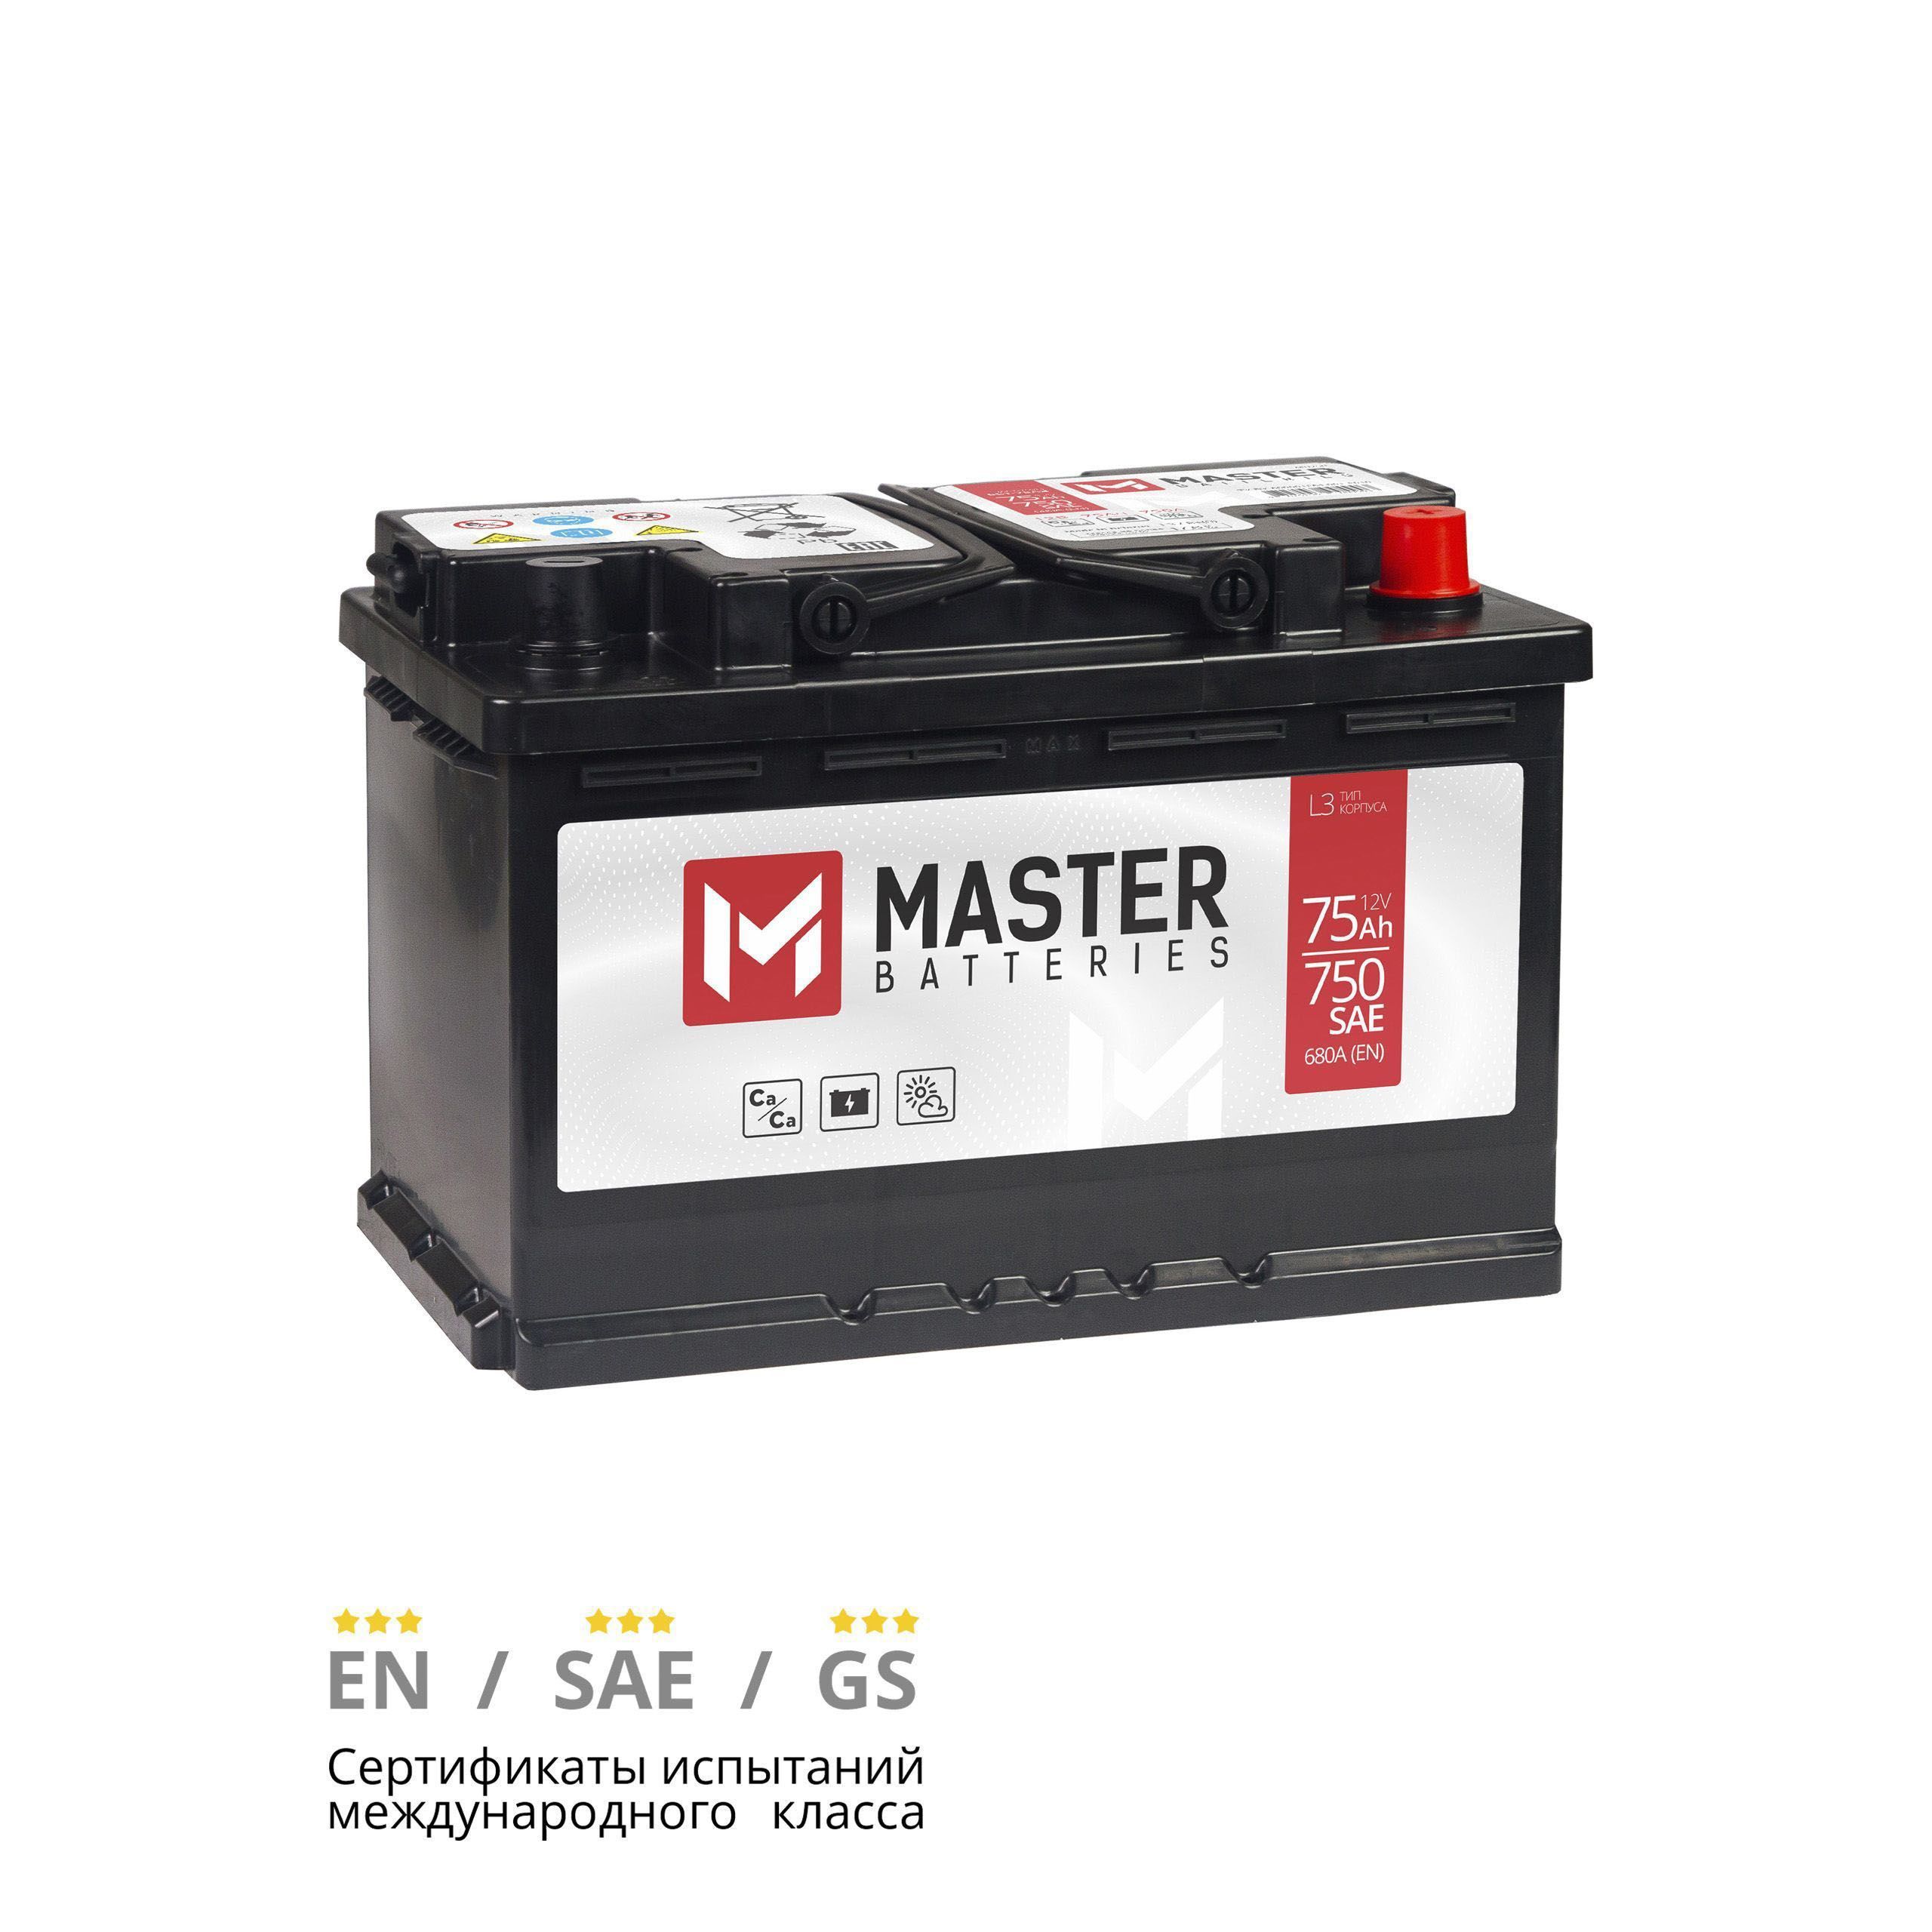 Master batteries. Аккумулятор Master. Аккумулятор 75ач. АКБ 6ст- 70 Master Batteries Asia евро (r+) en 550 /1ак Group Беларусь/. АКБ Мастерс логотип.